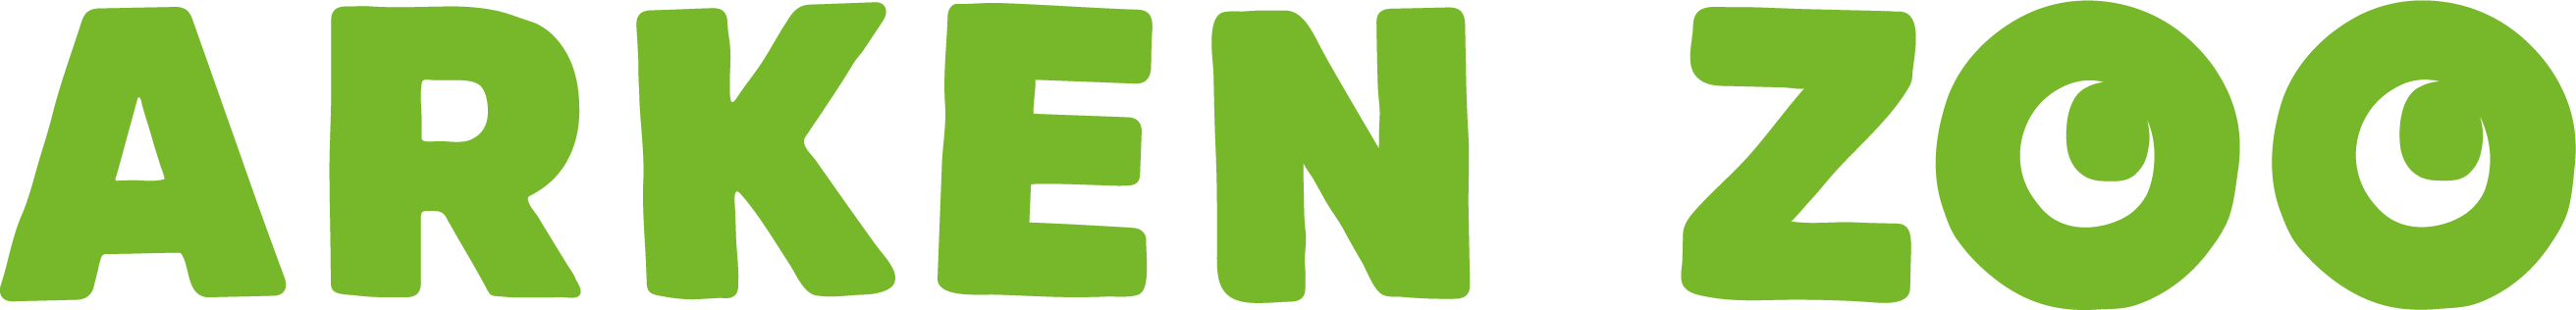 Logotyp One Row Green RGB.png